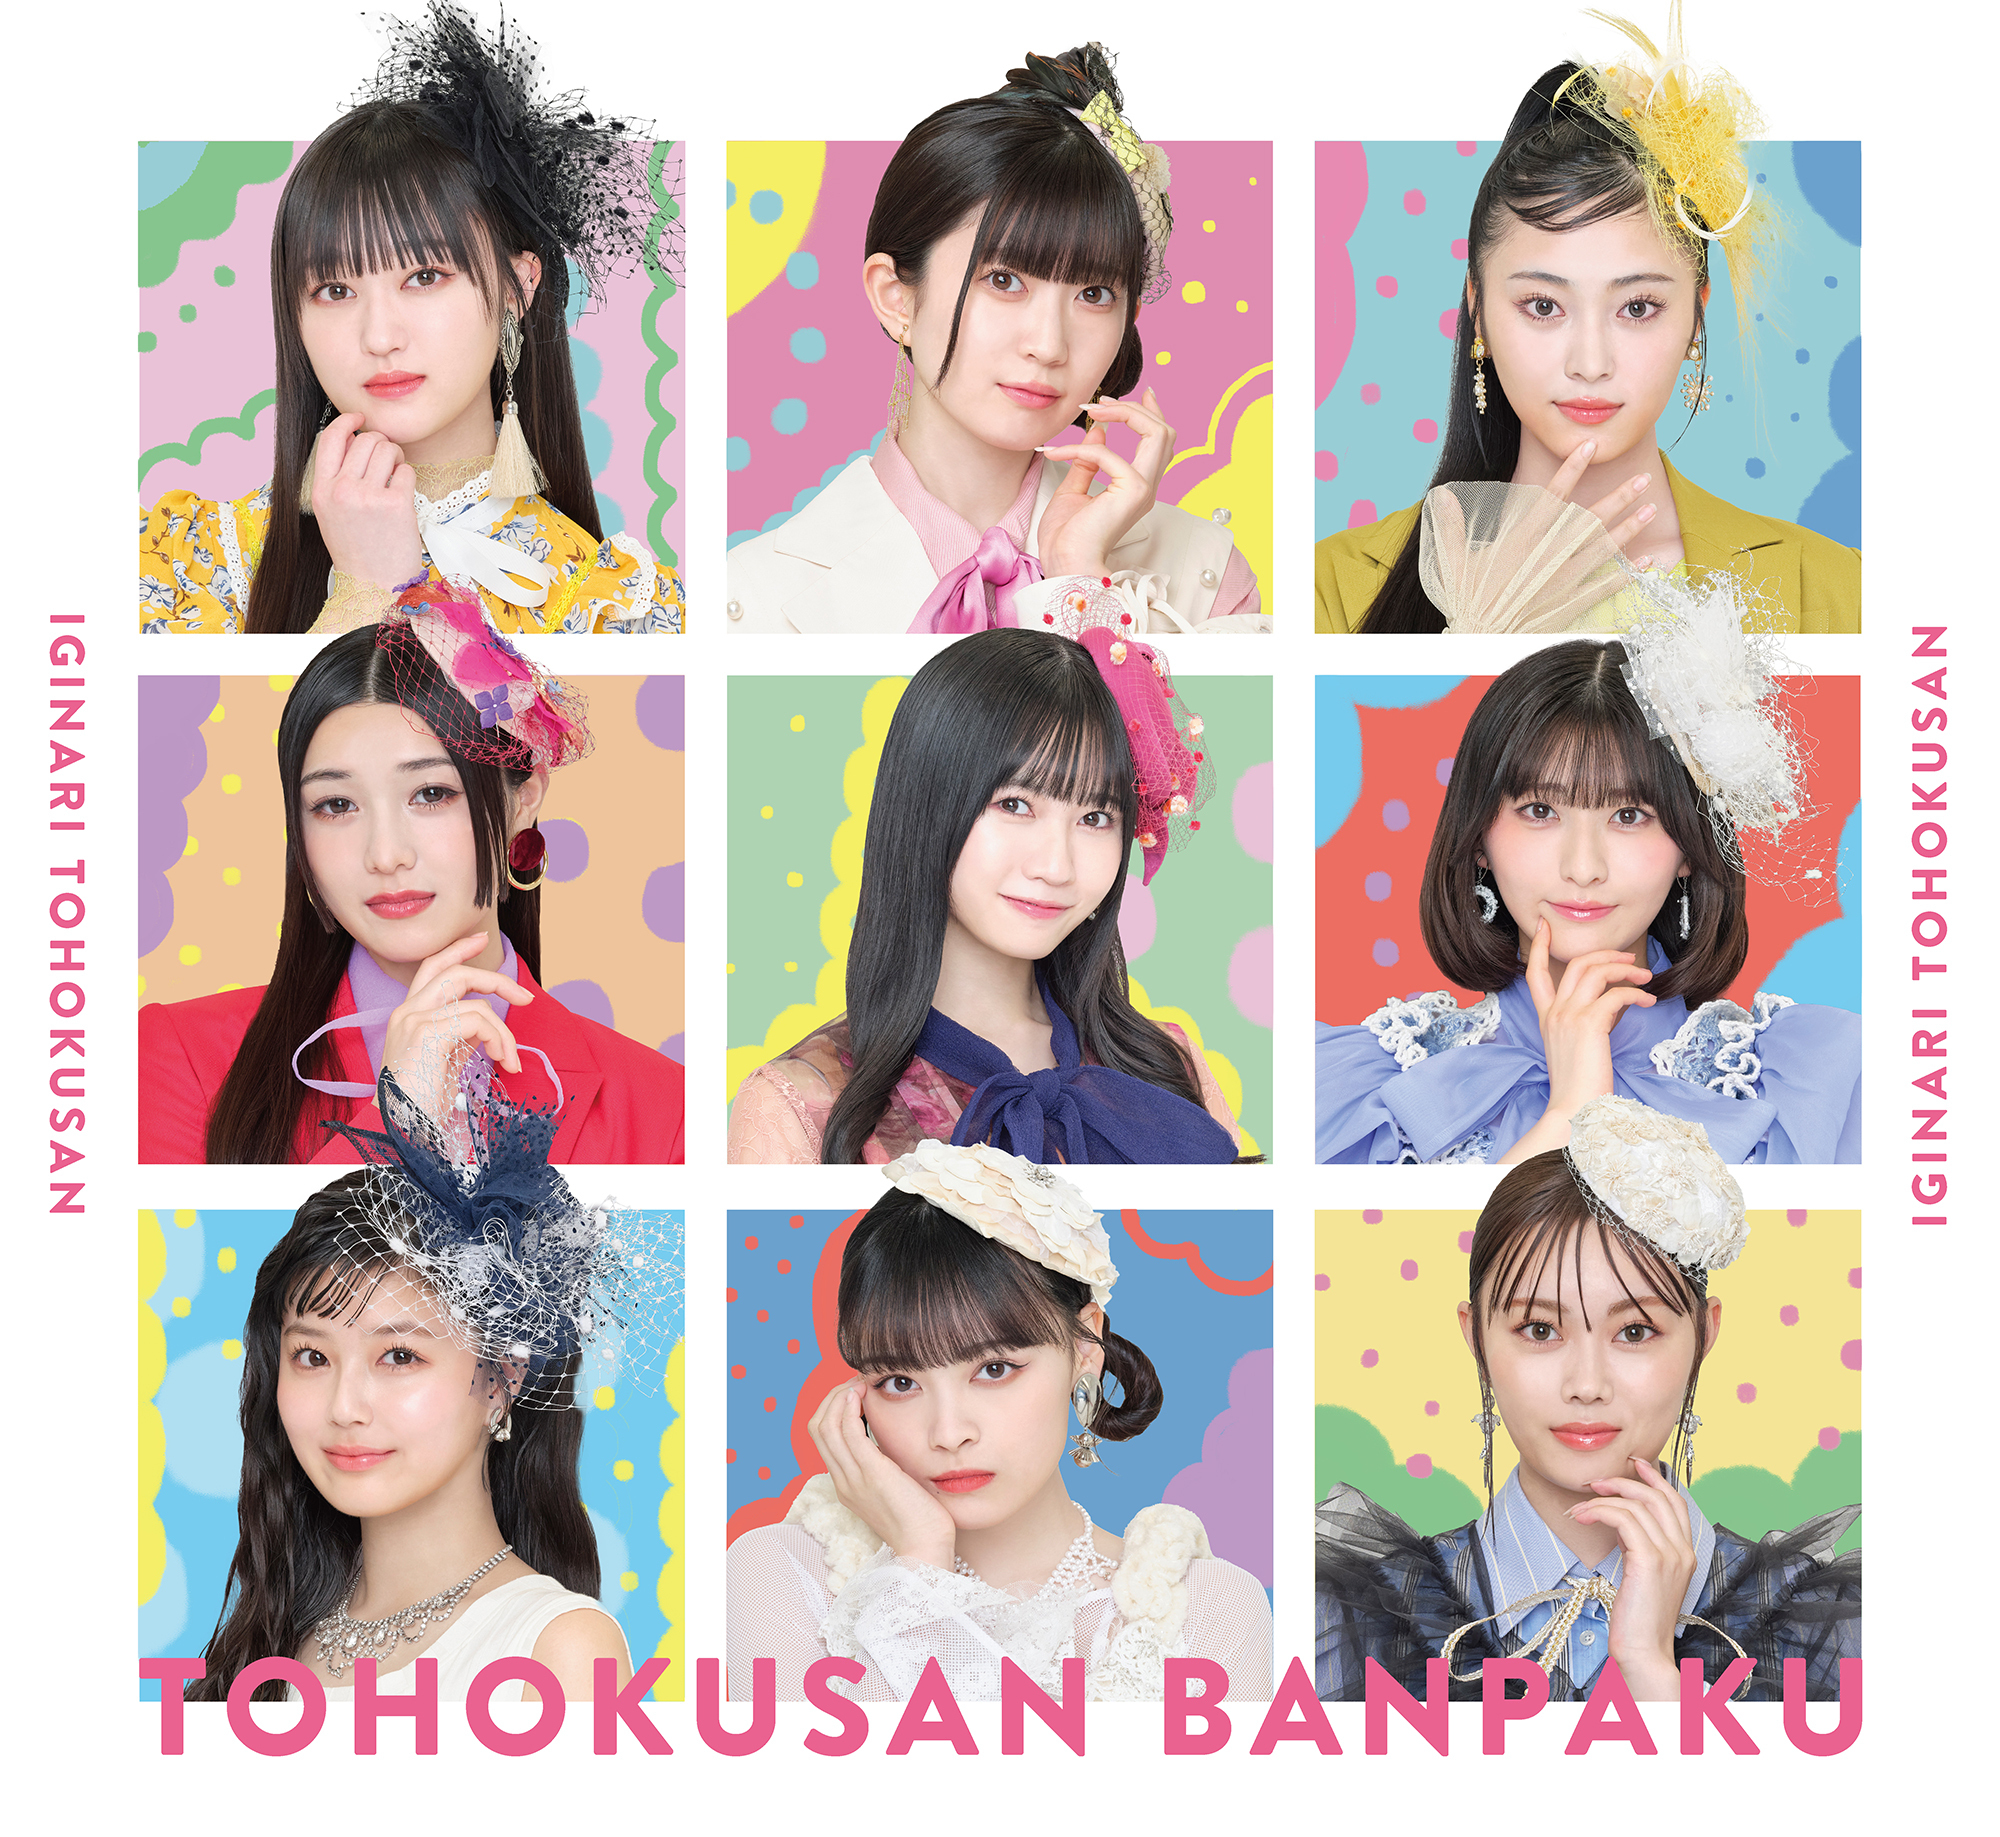 Tohokusan-_banpaku_jk_fix